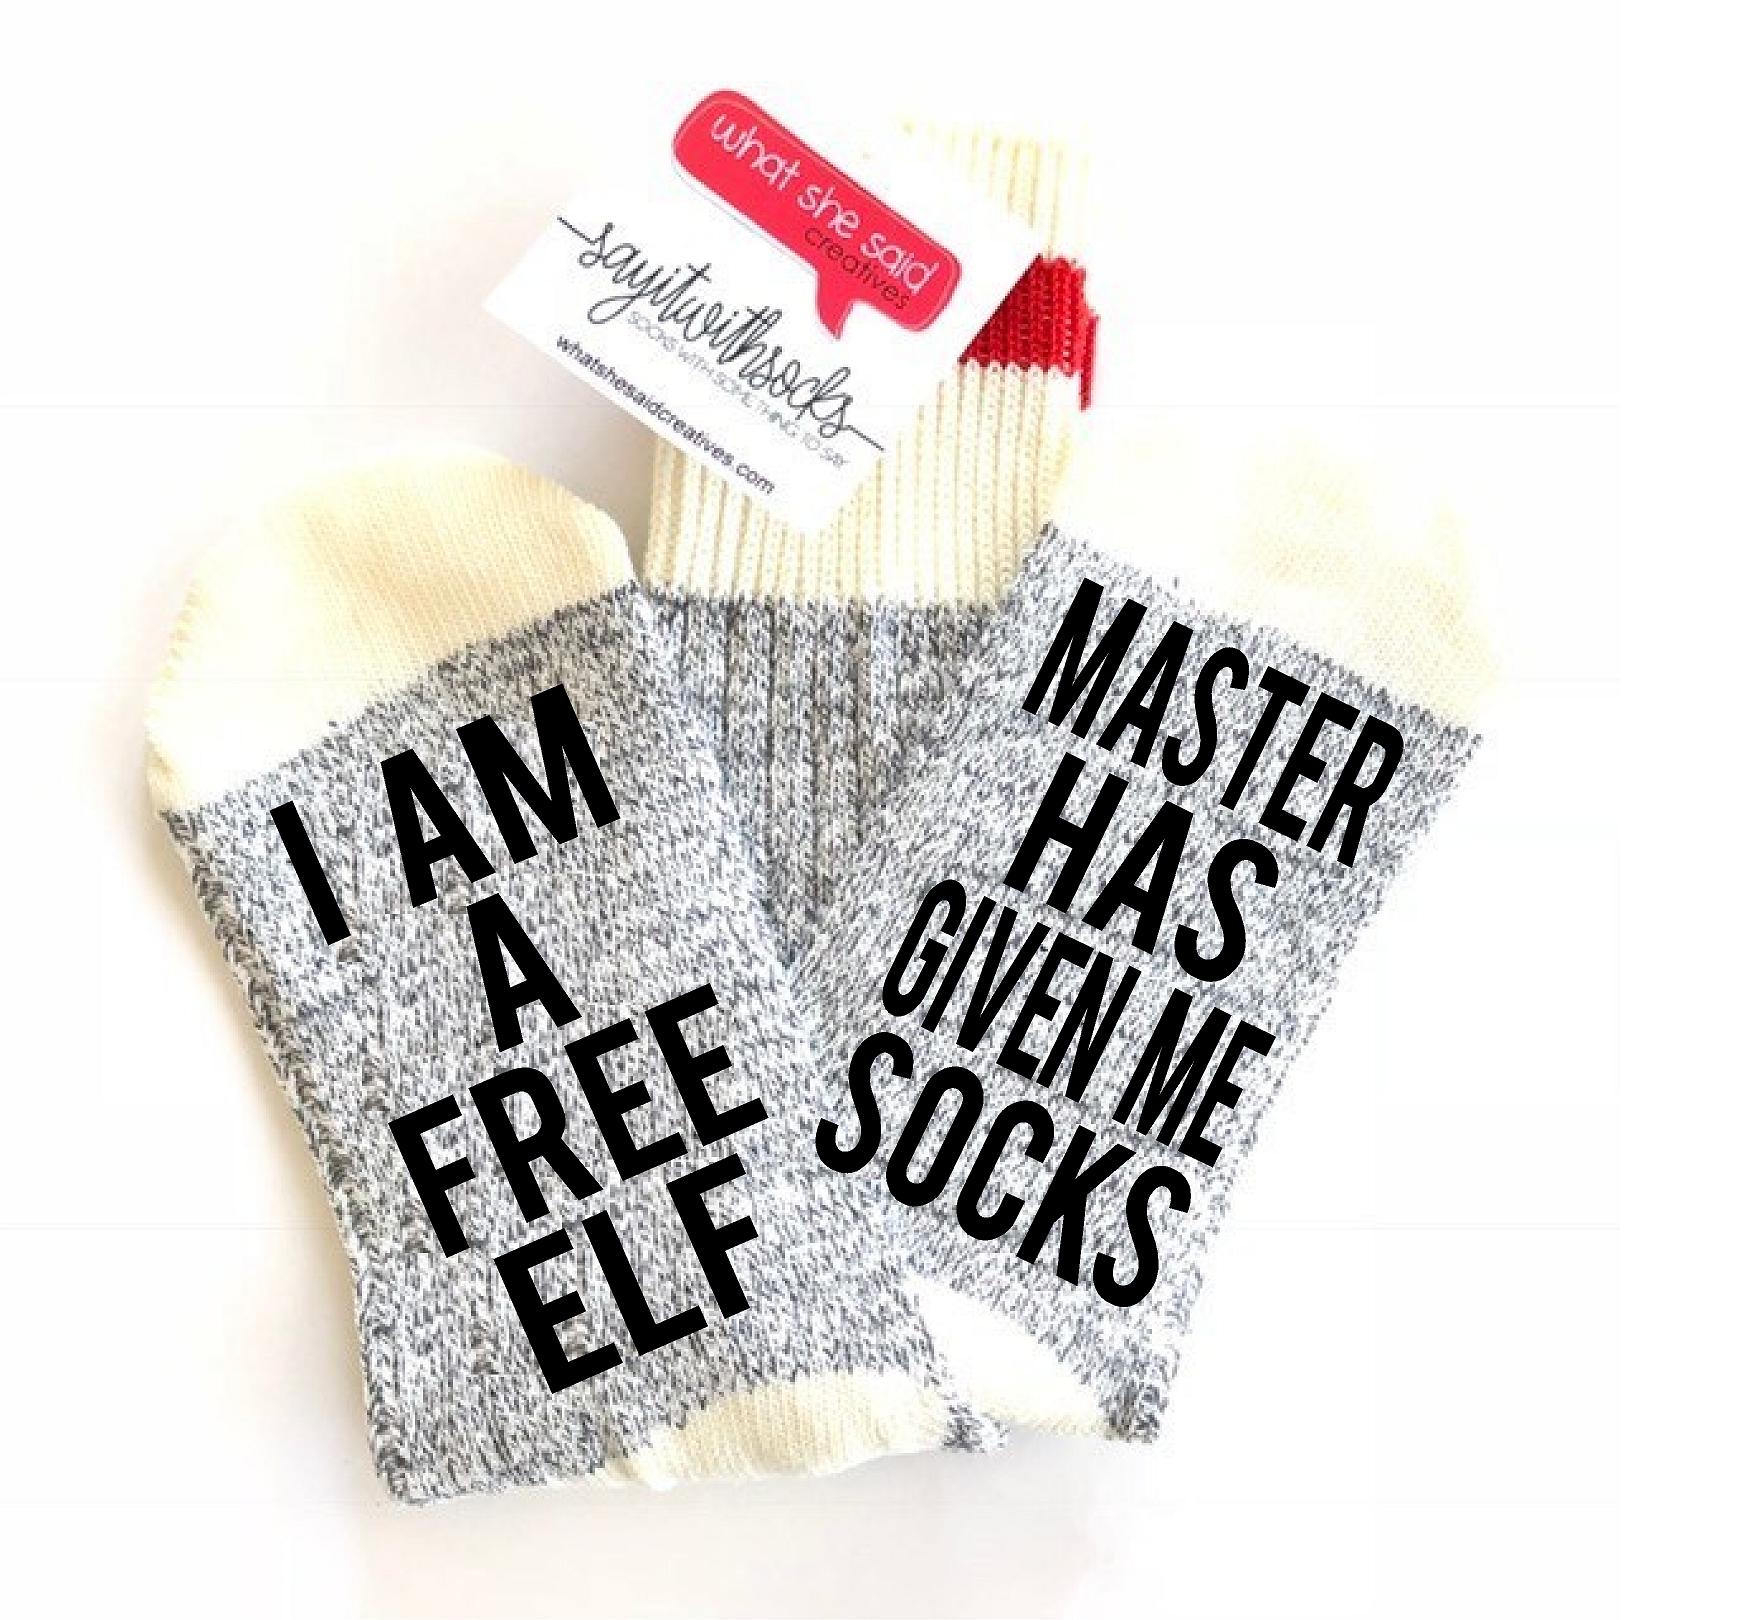 Master has given me socks